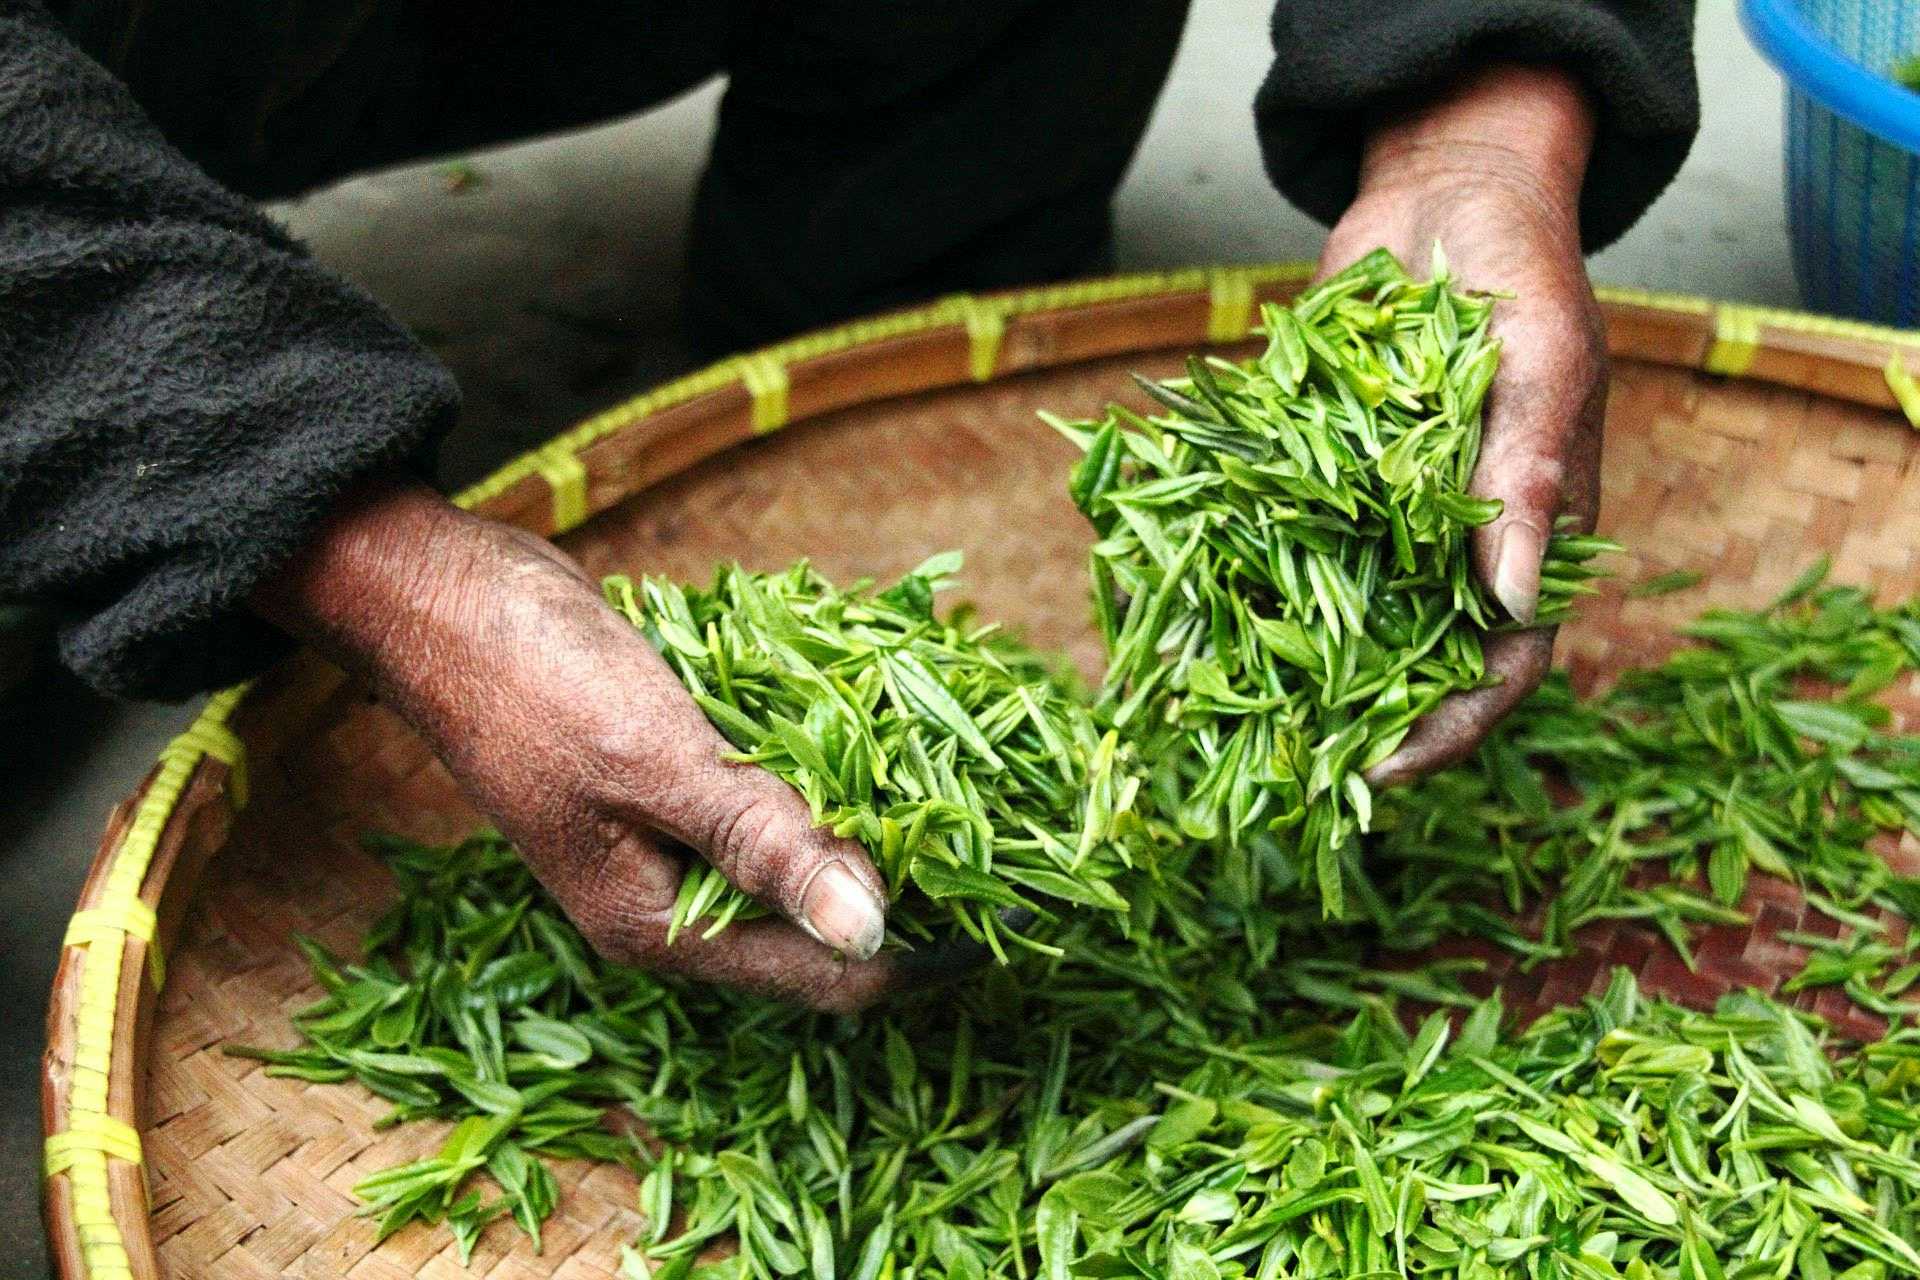 Raw green tea leaves in a basket